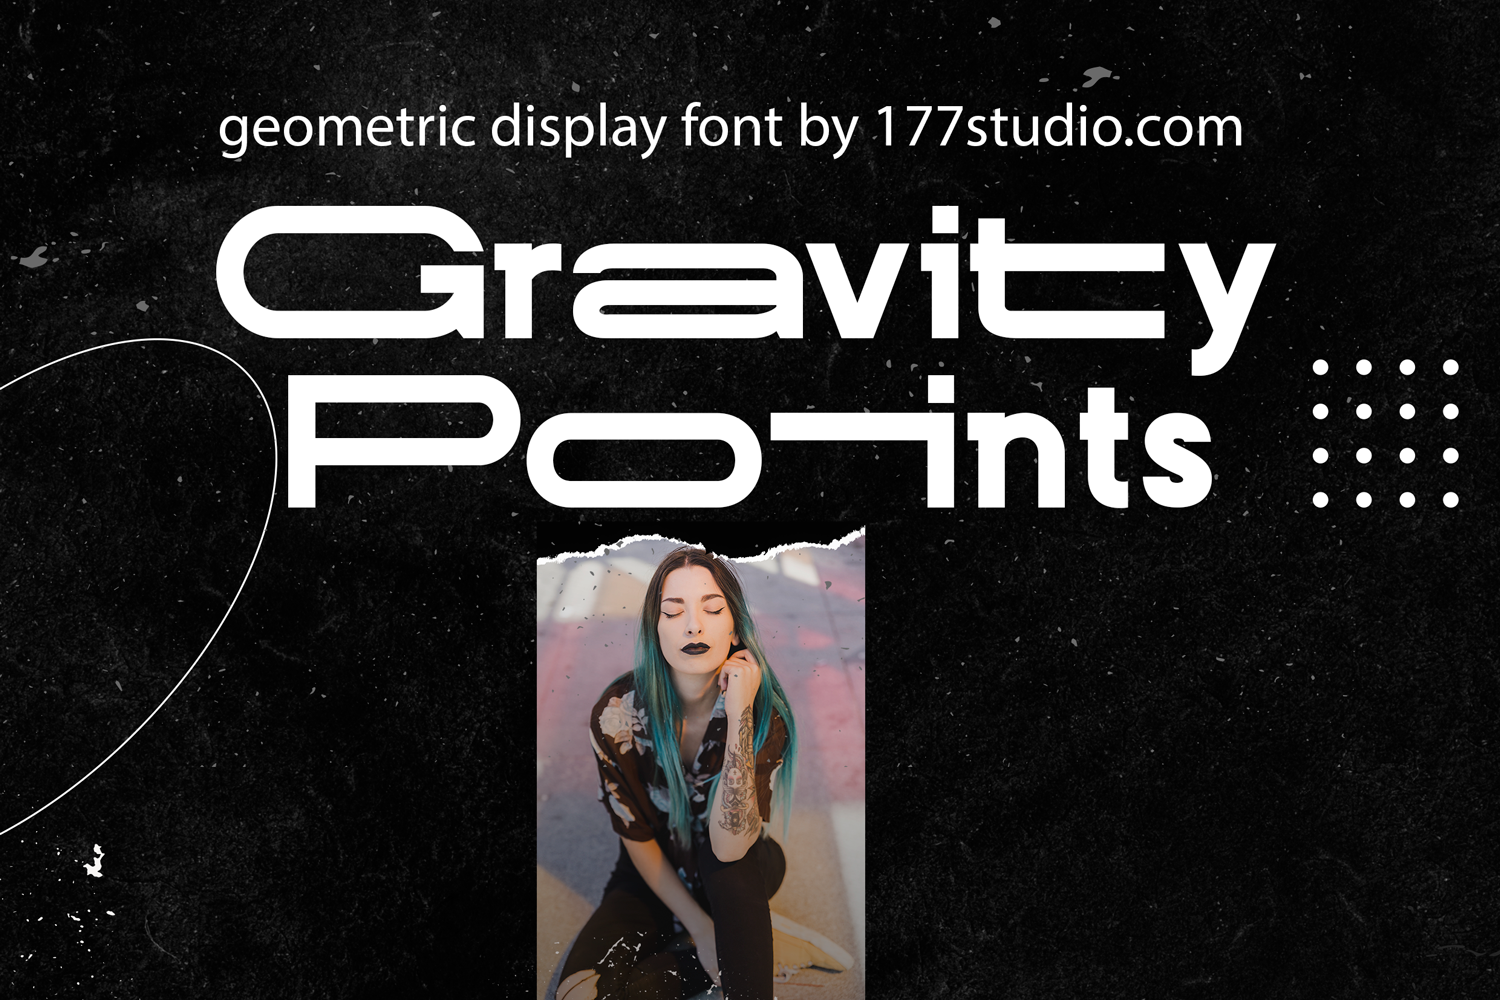 Gravity Points Width1